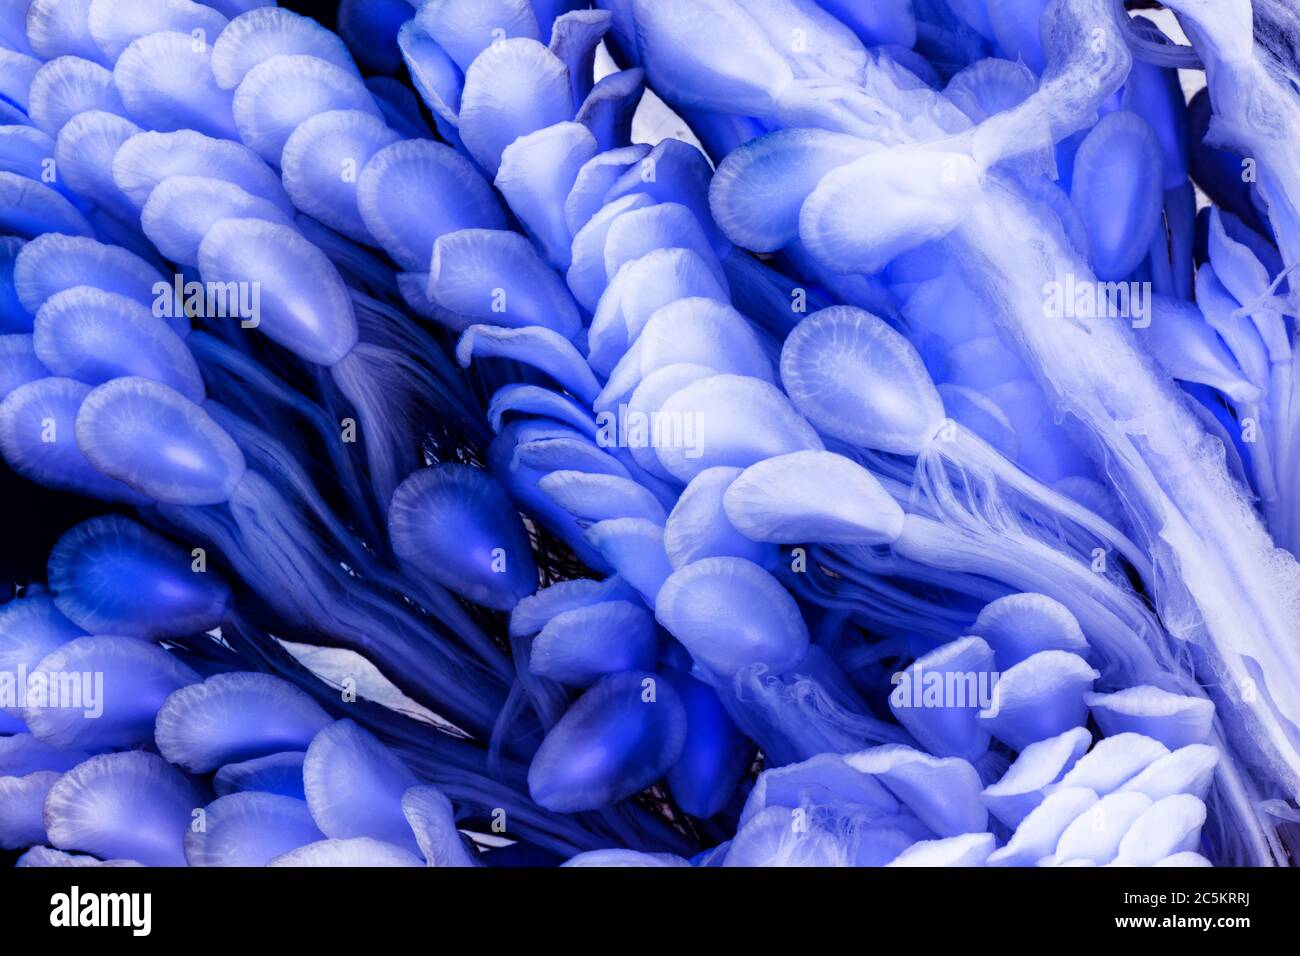 Microscopic Image of Surreal Blue Milkweed Seeds Stock Photo